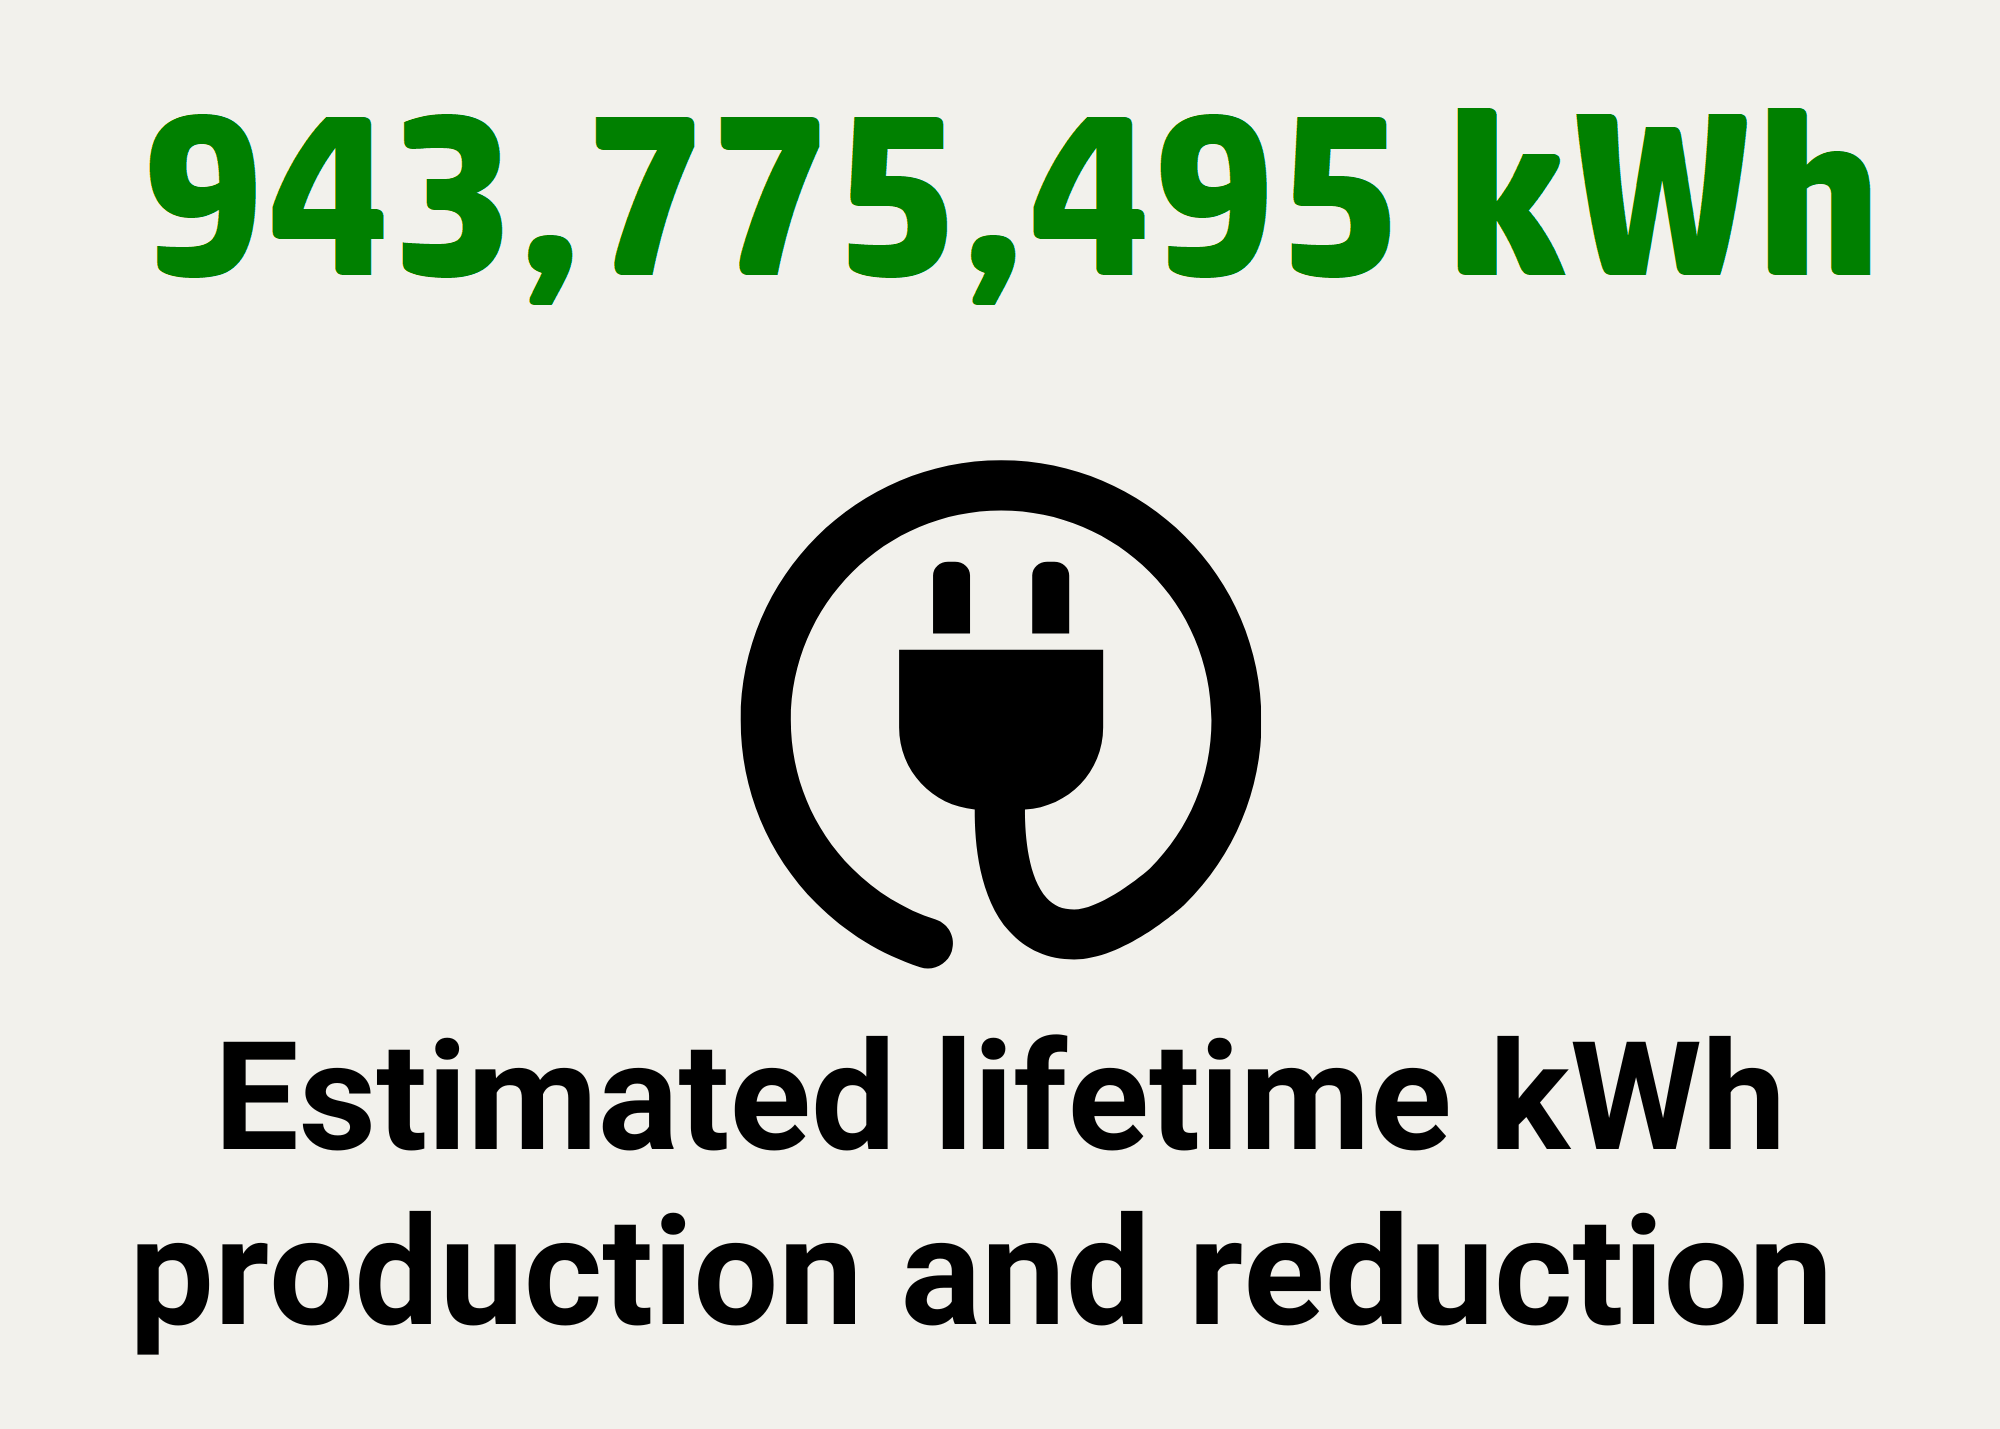 Estimated lifetime kWh production and rdx: 943,775,495 kWh